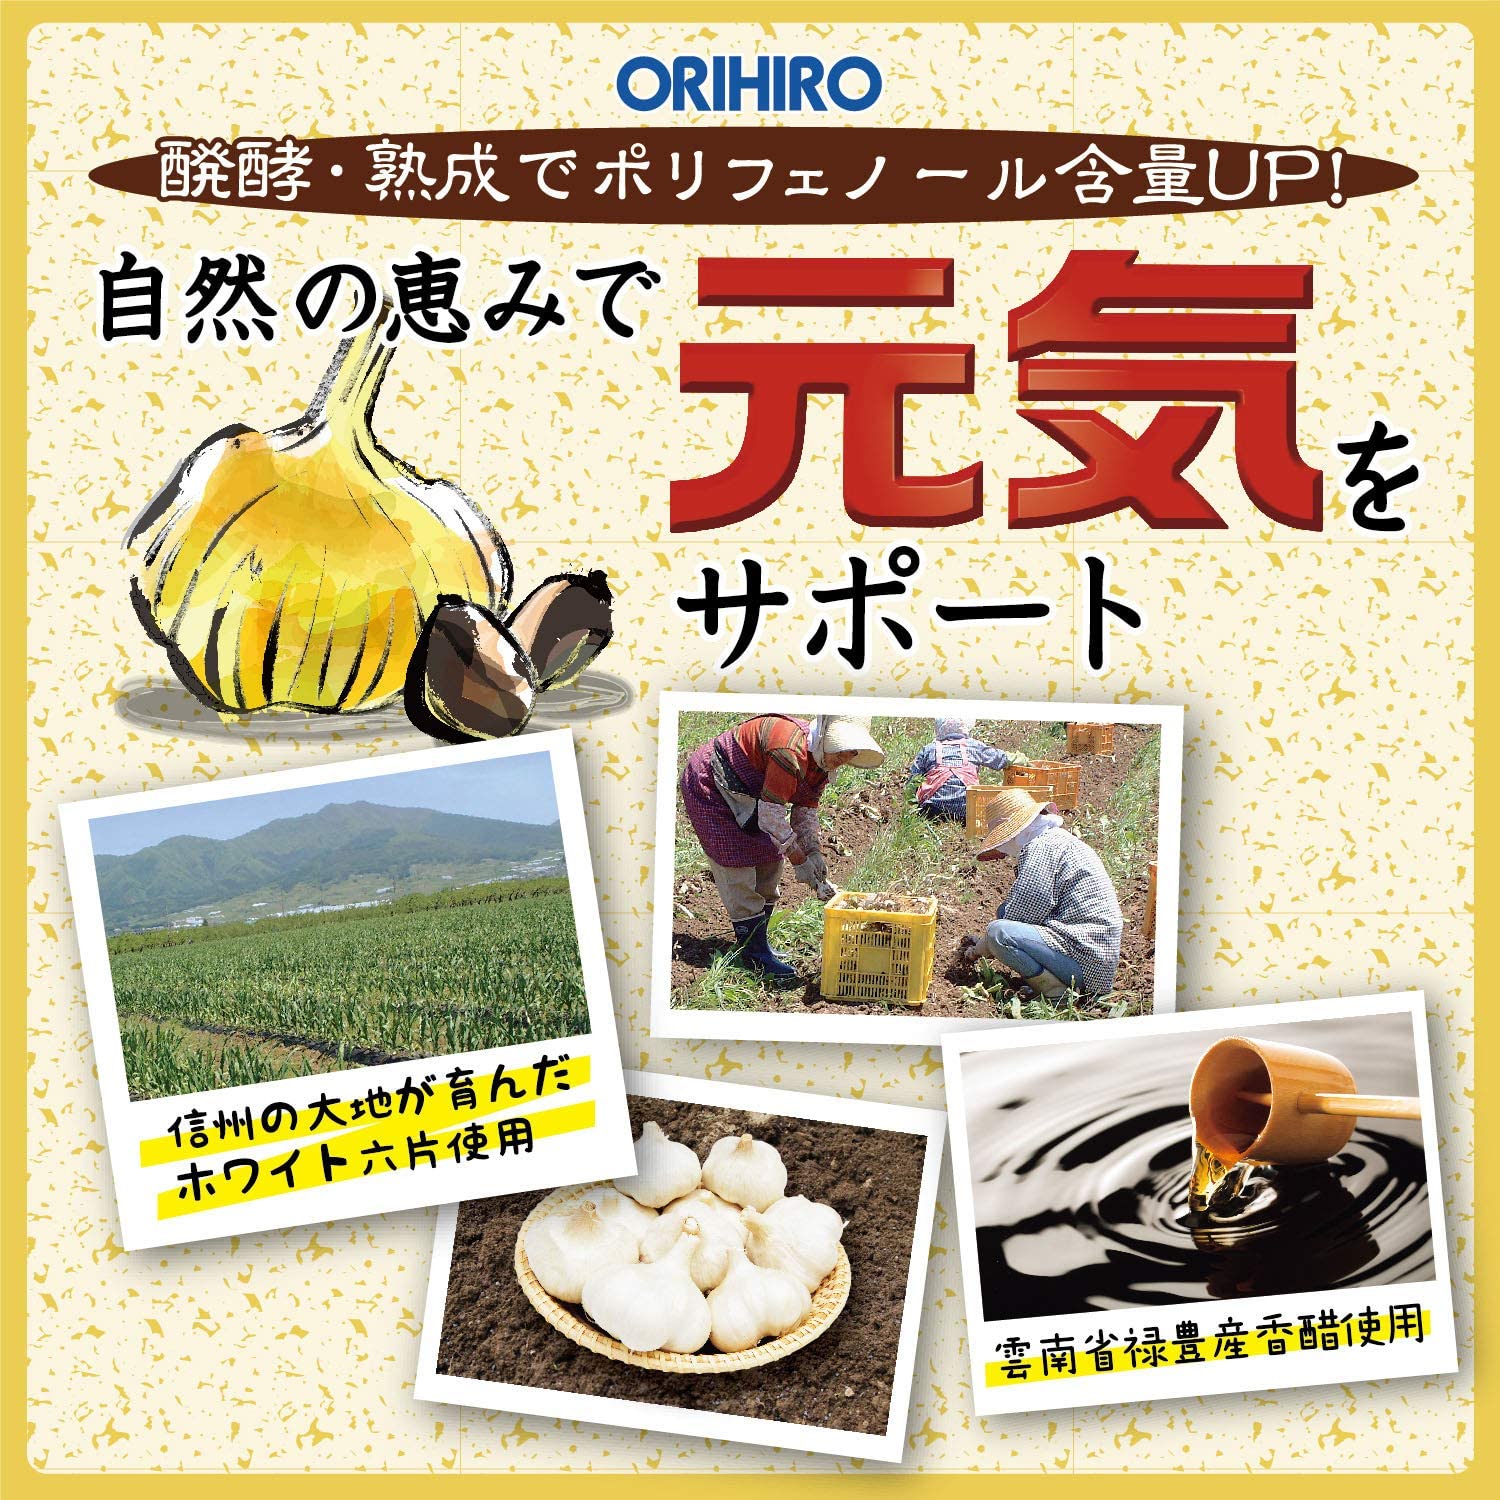 Orihiro Fermented Black Garlic Vinegar Soft Capsules 45 Days